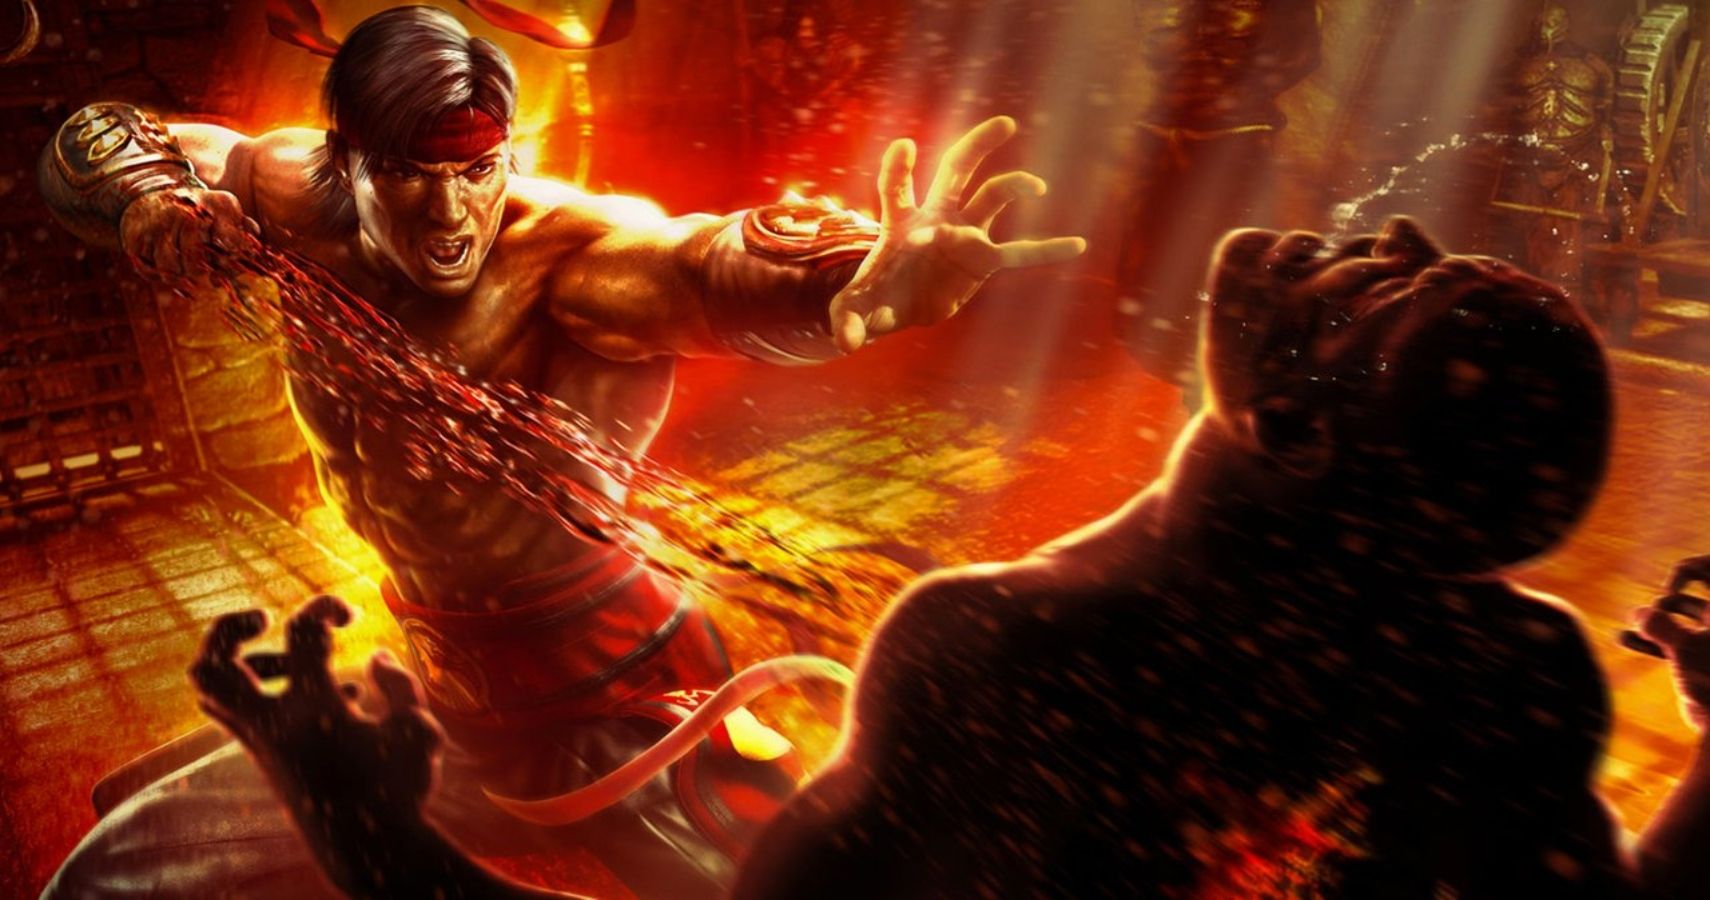 Mortal Kombat 11 & Days Gone Dominated April Game Sales In The US